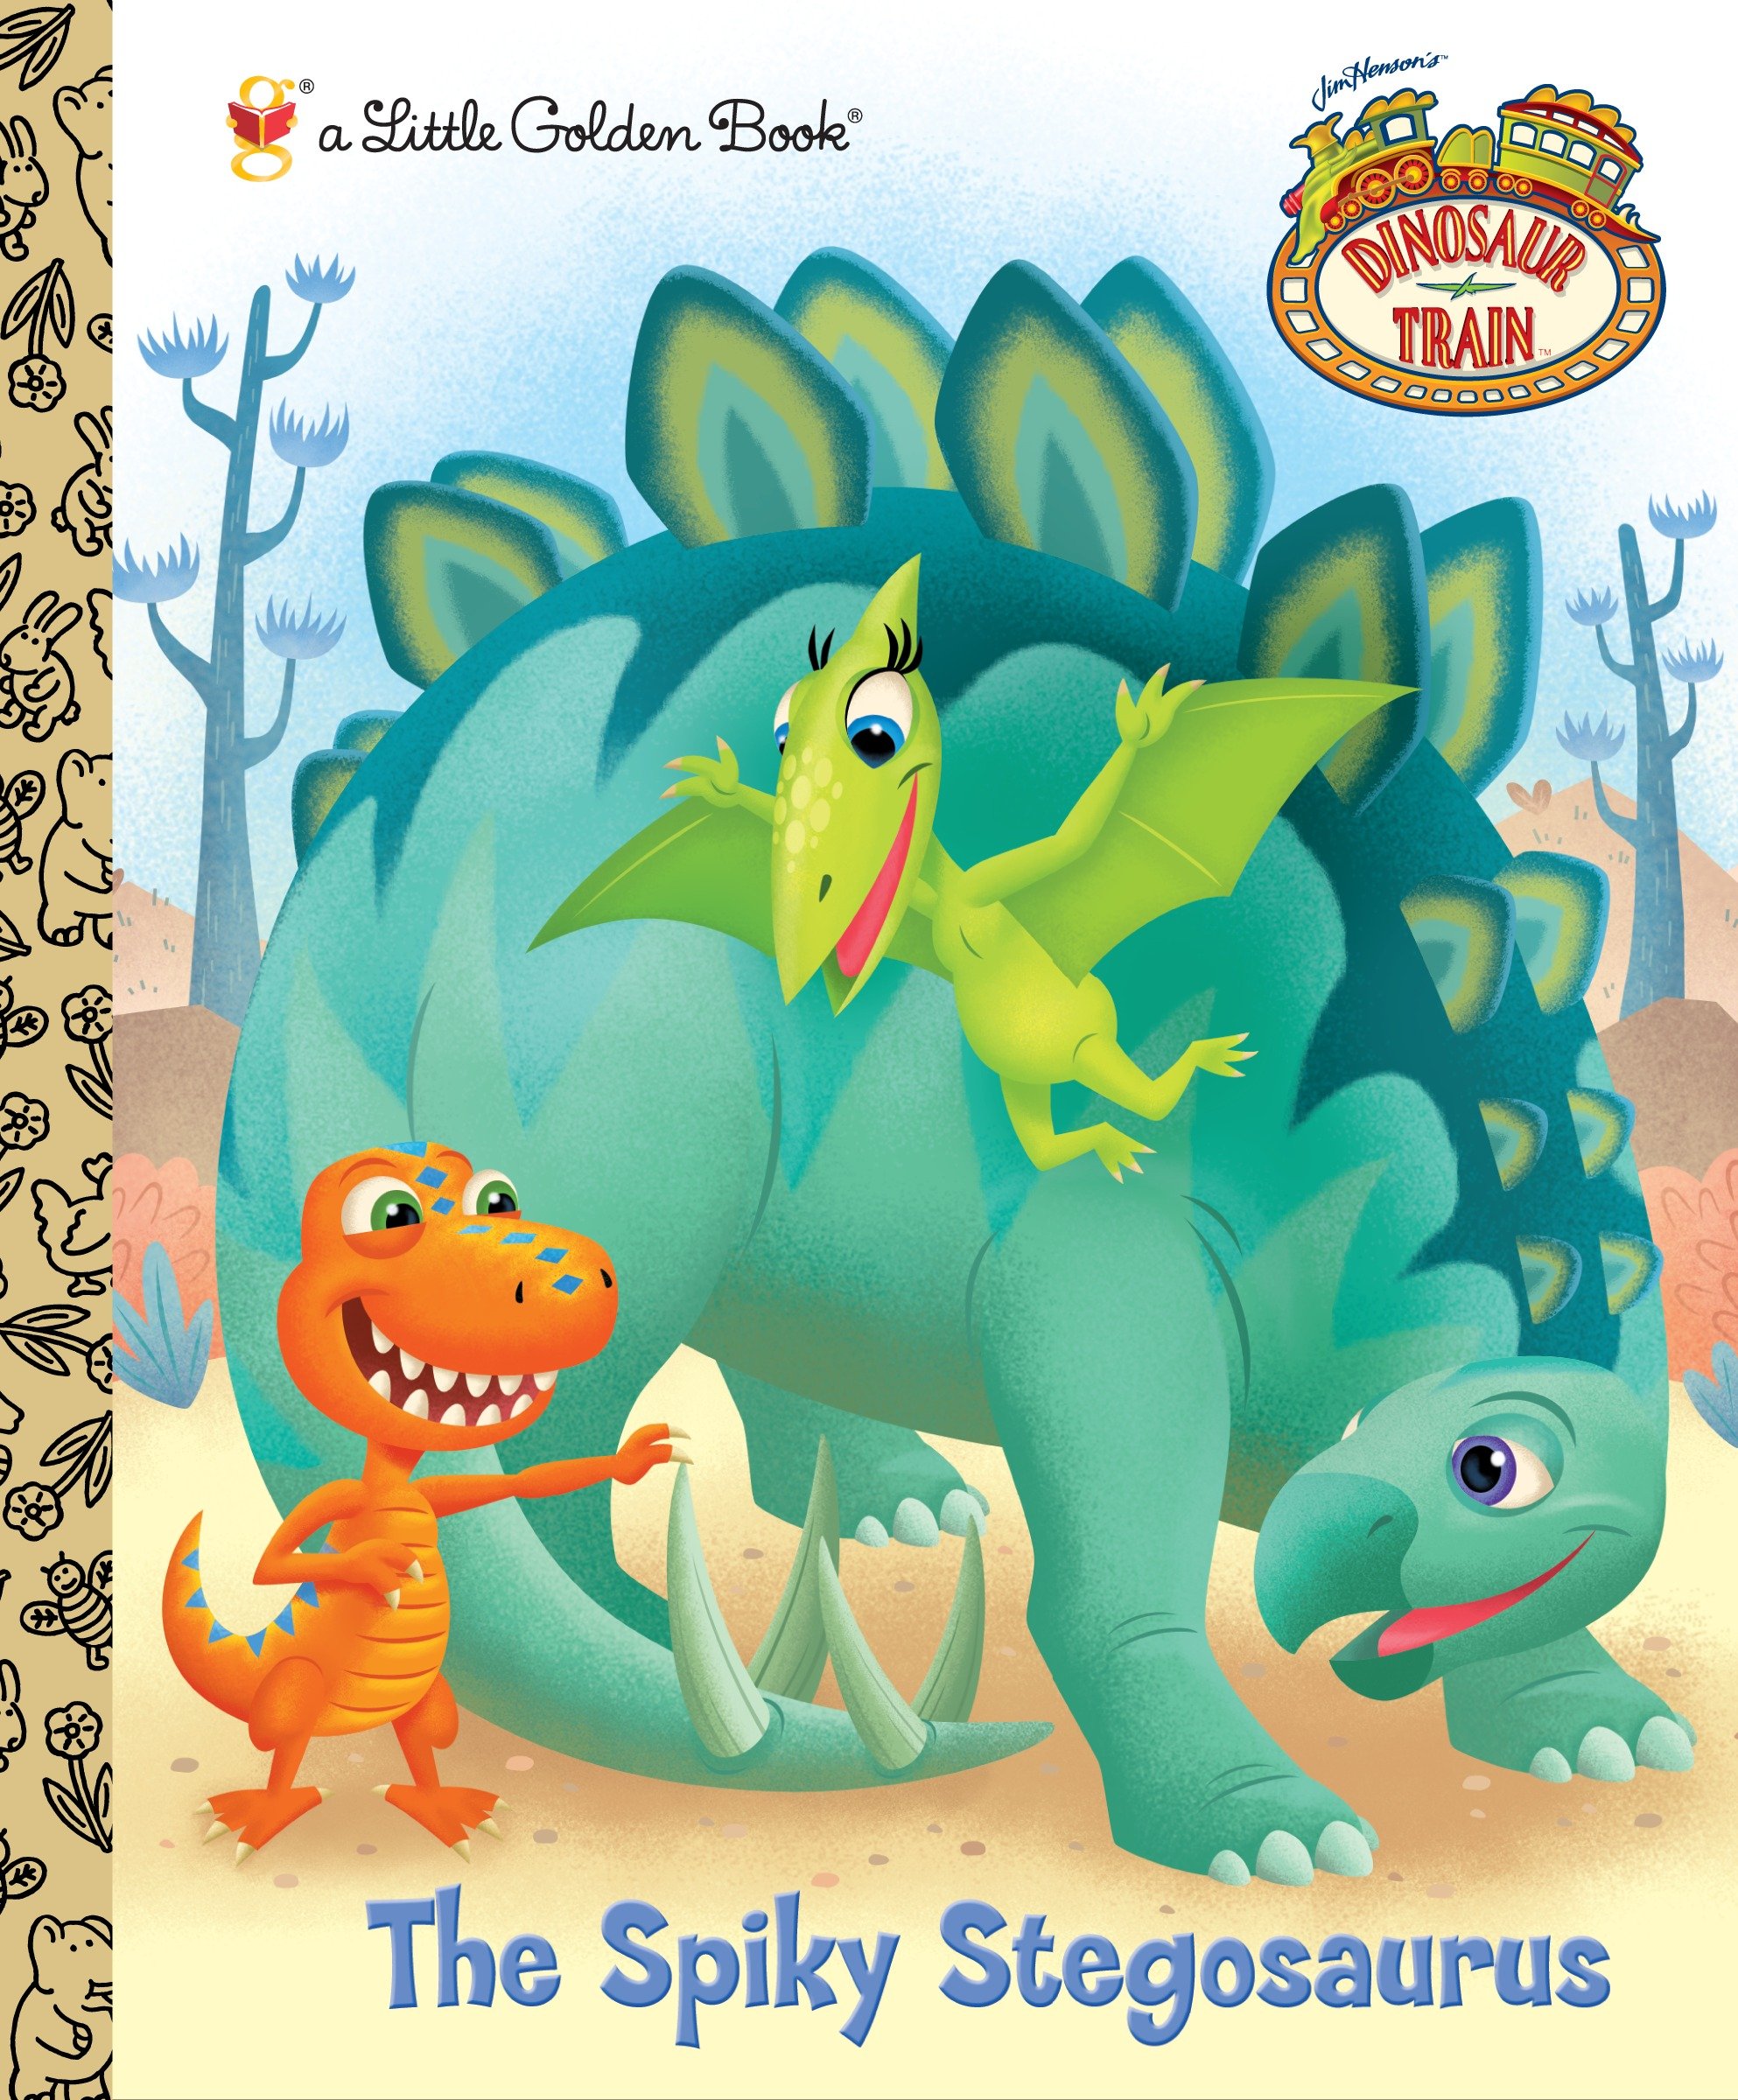 The spiky stegosaurus cover image